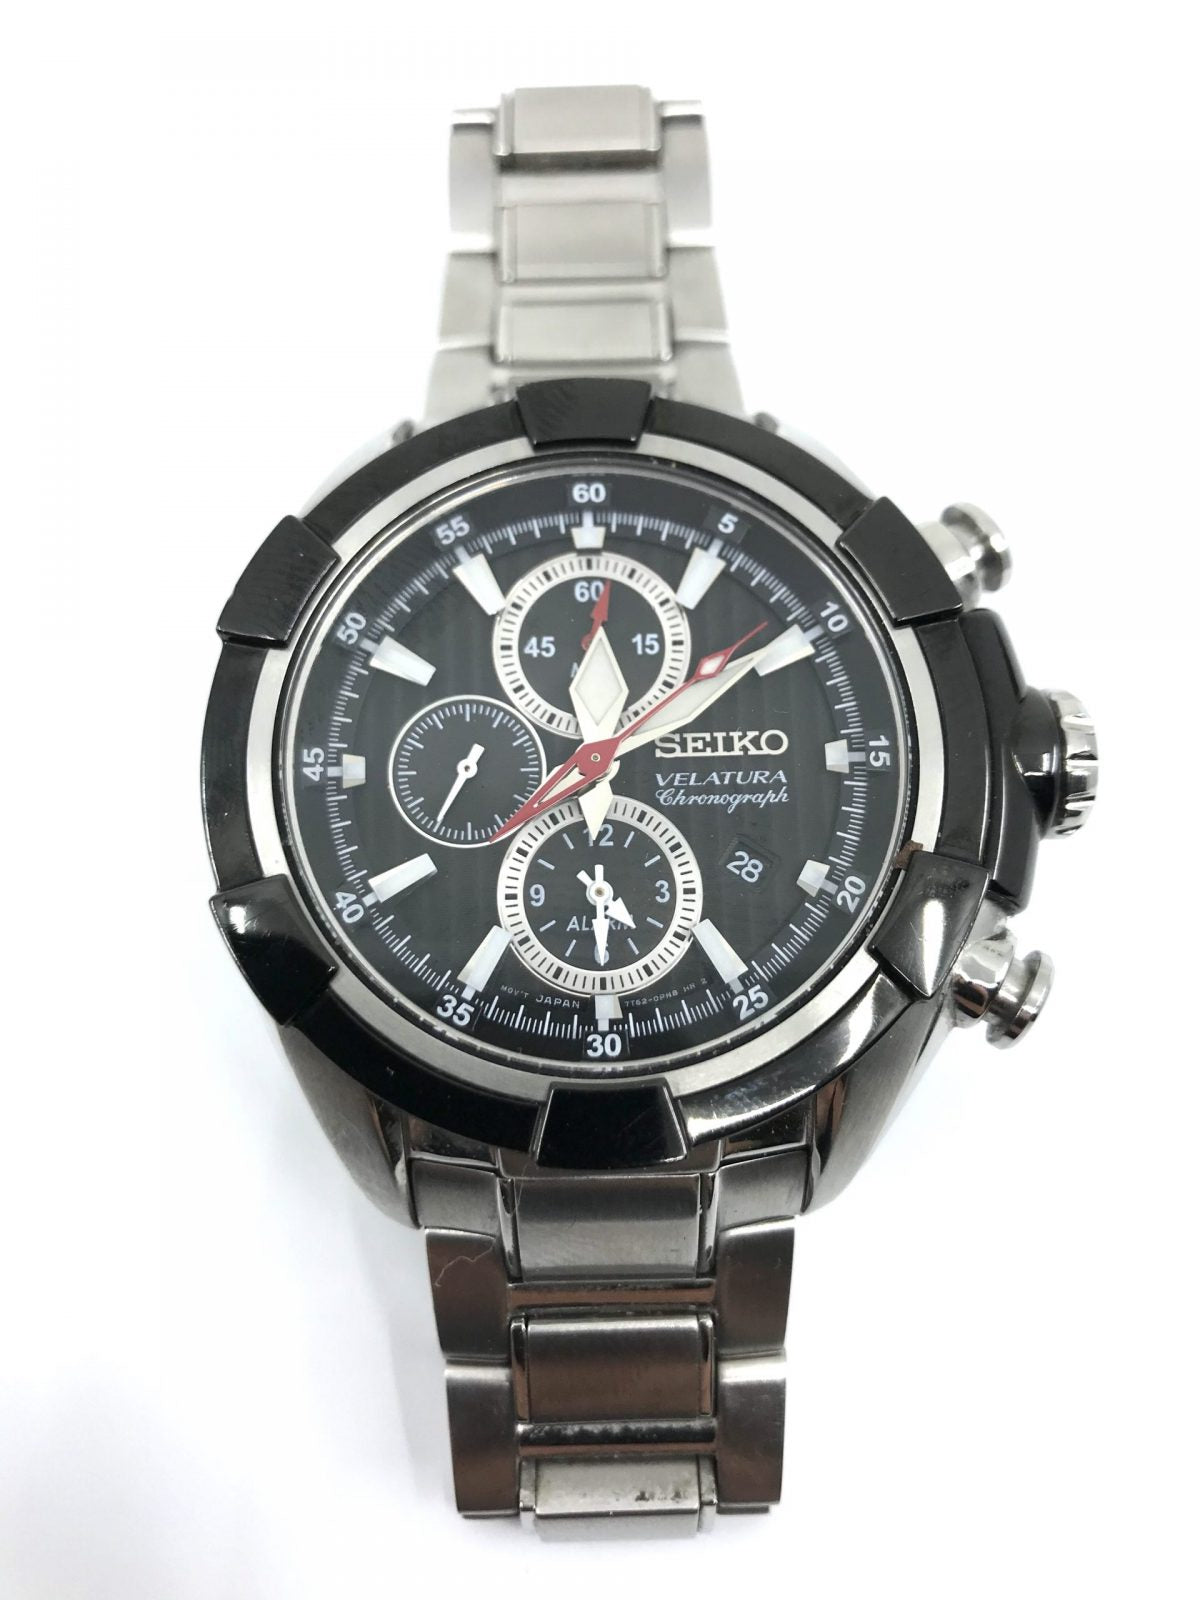 58 Seiko Velatura watch used chronograph quartz stainless steel